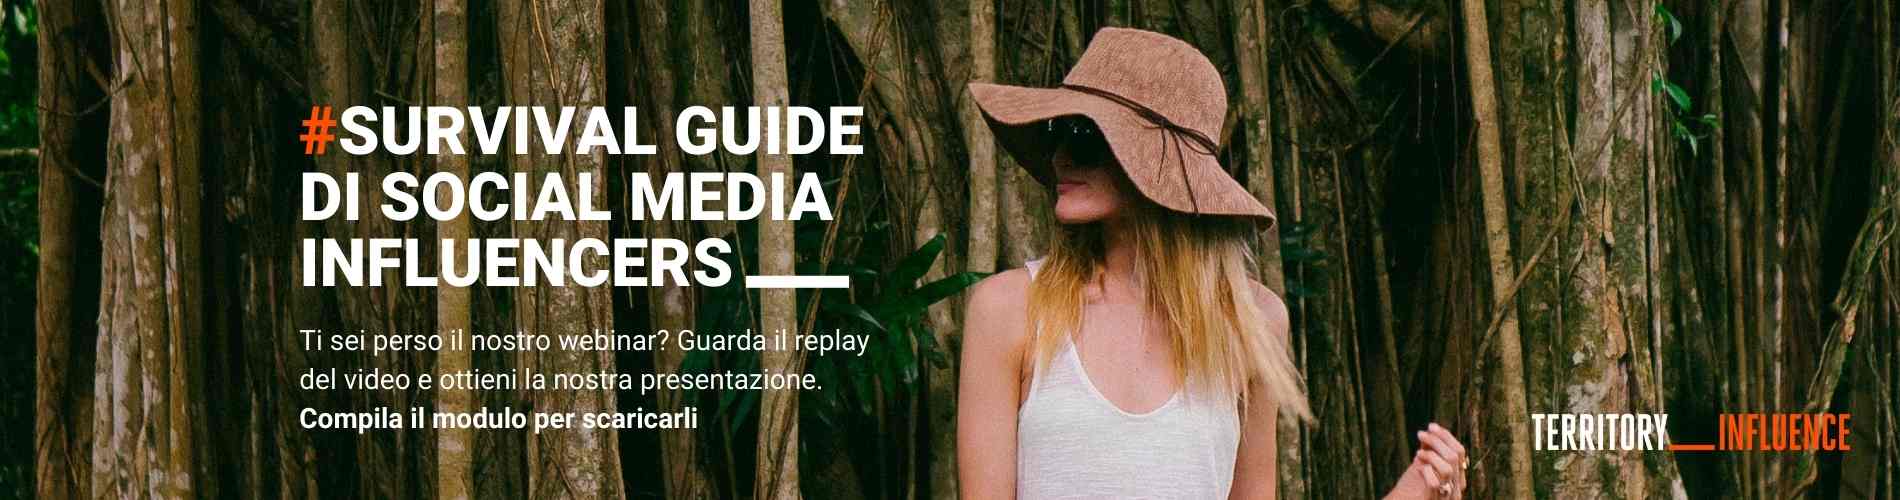 Survival Guide di Social Media Influencers